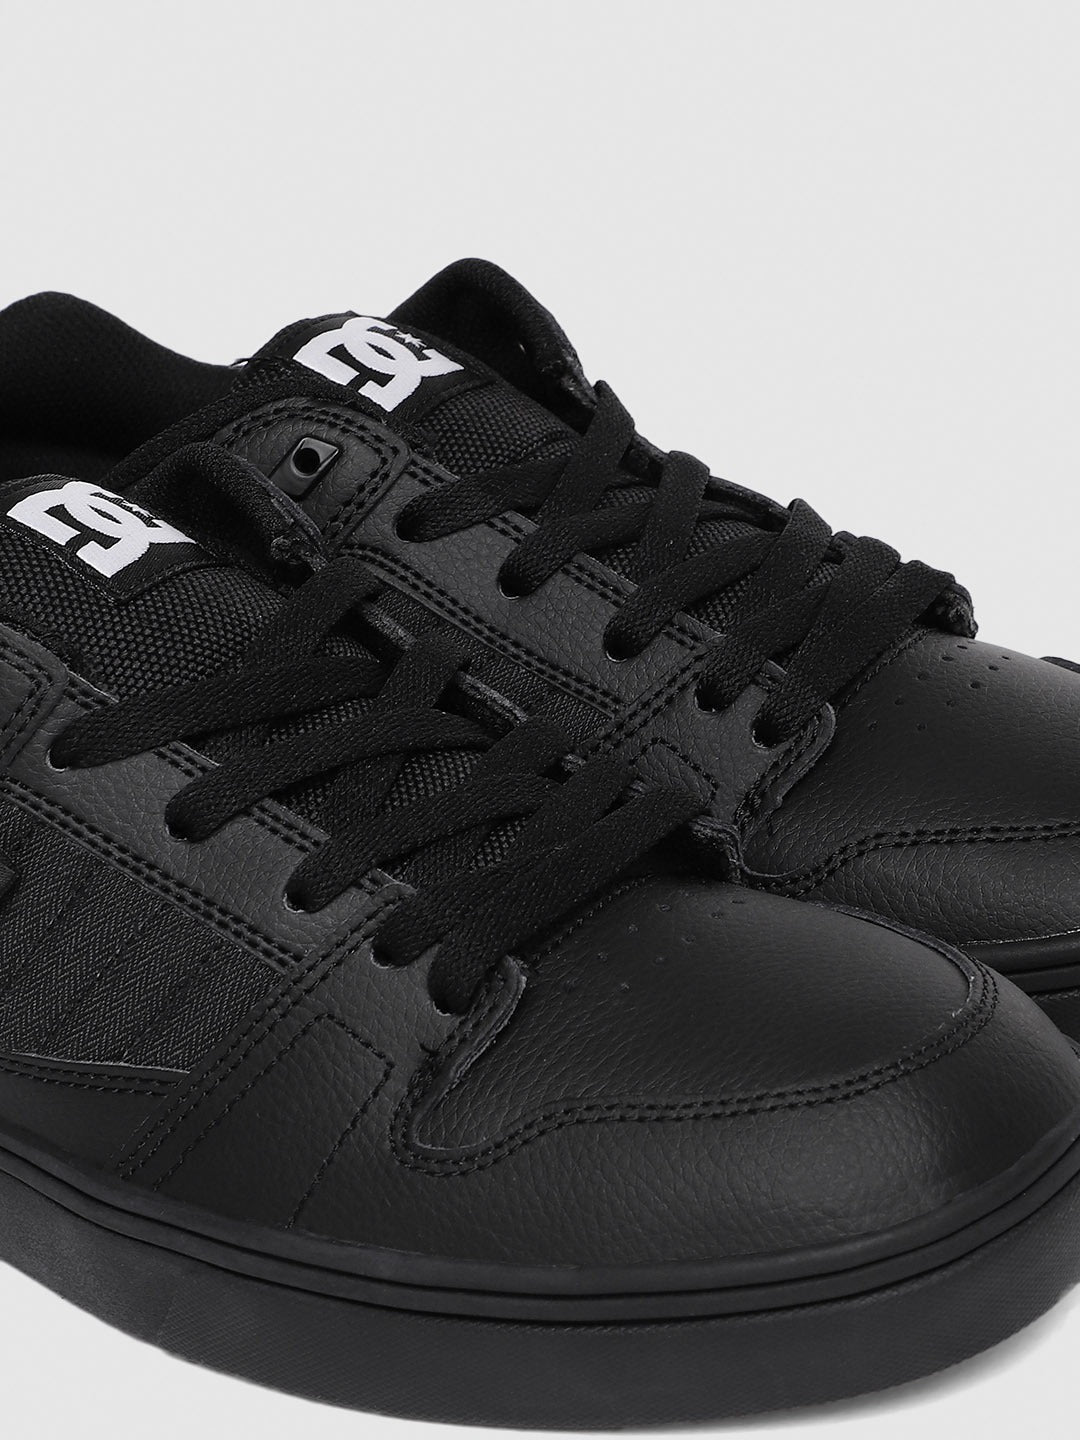 Men Black Leather Sneakers-ADYS100225(XKSW)